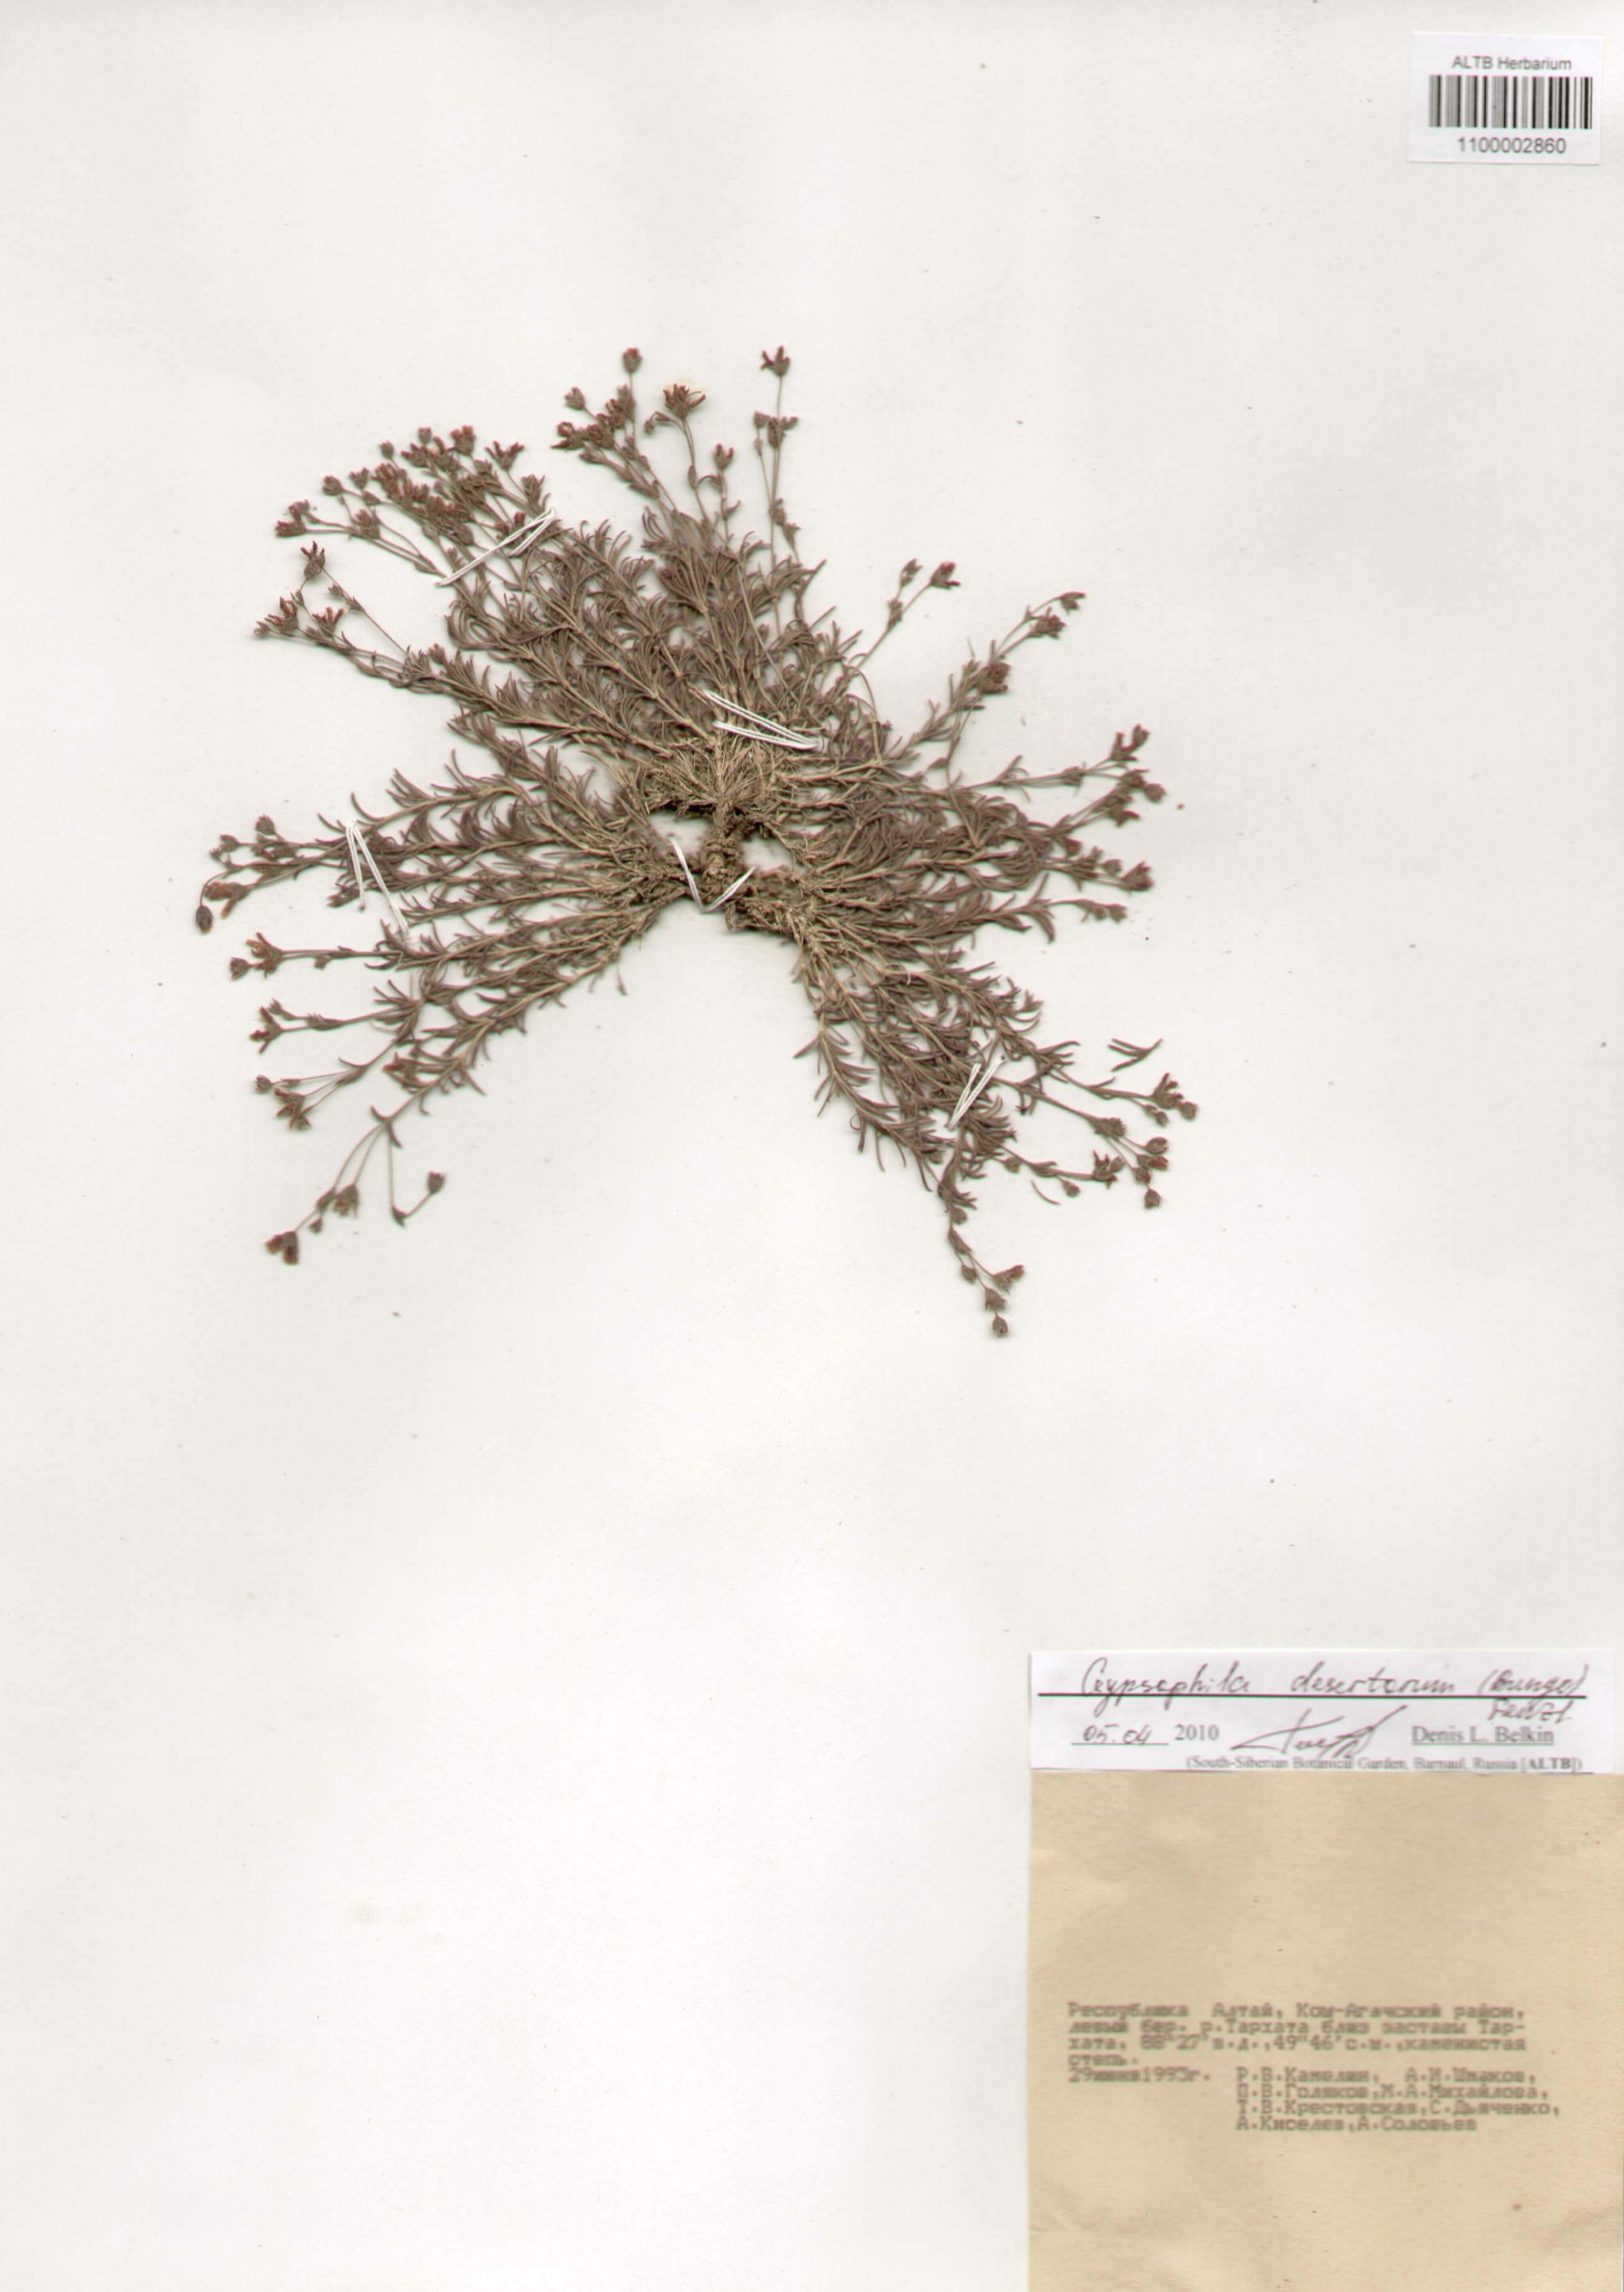 Caryophyllaceae,Gypsophila desertorum (Bunge) Fenzl.